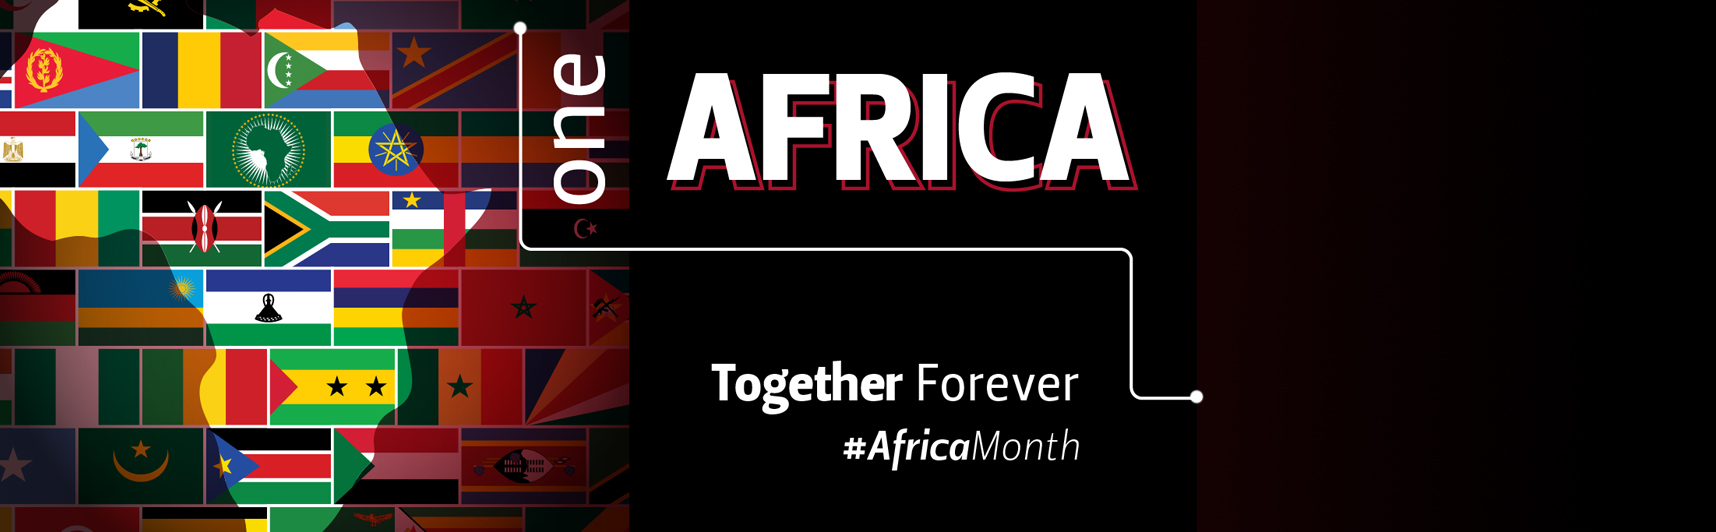 Africa month banner